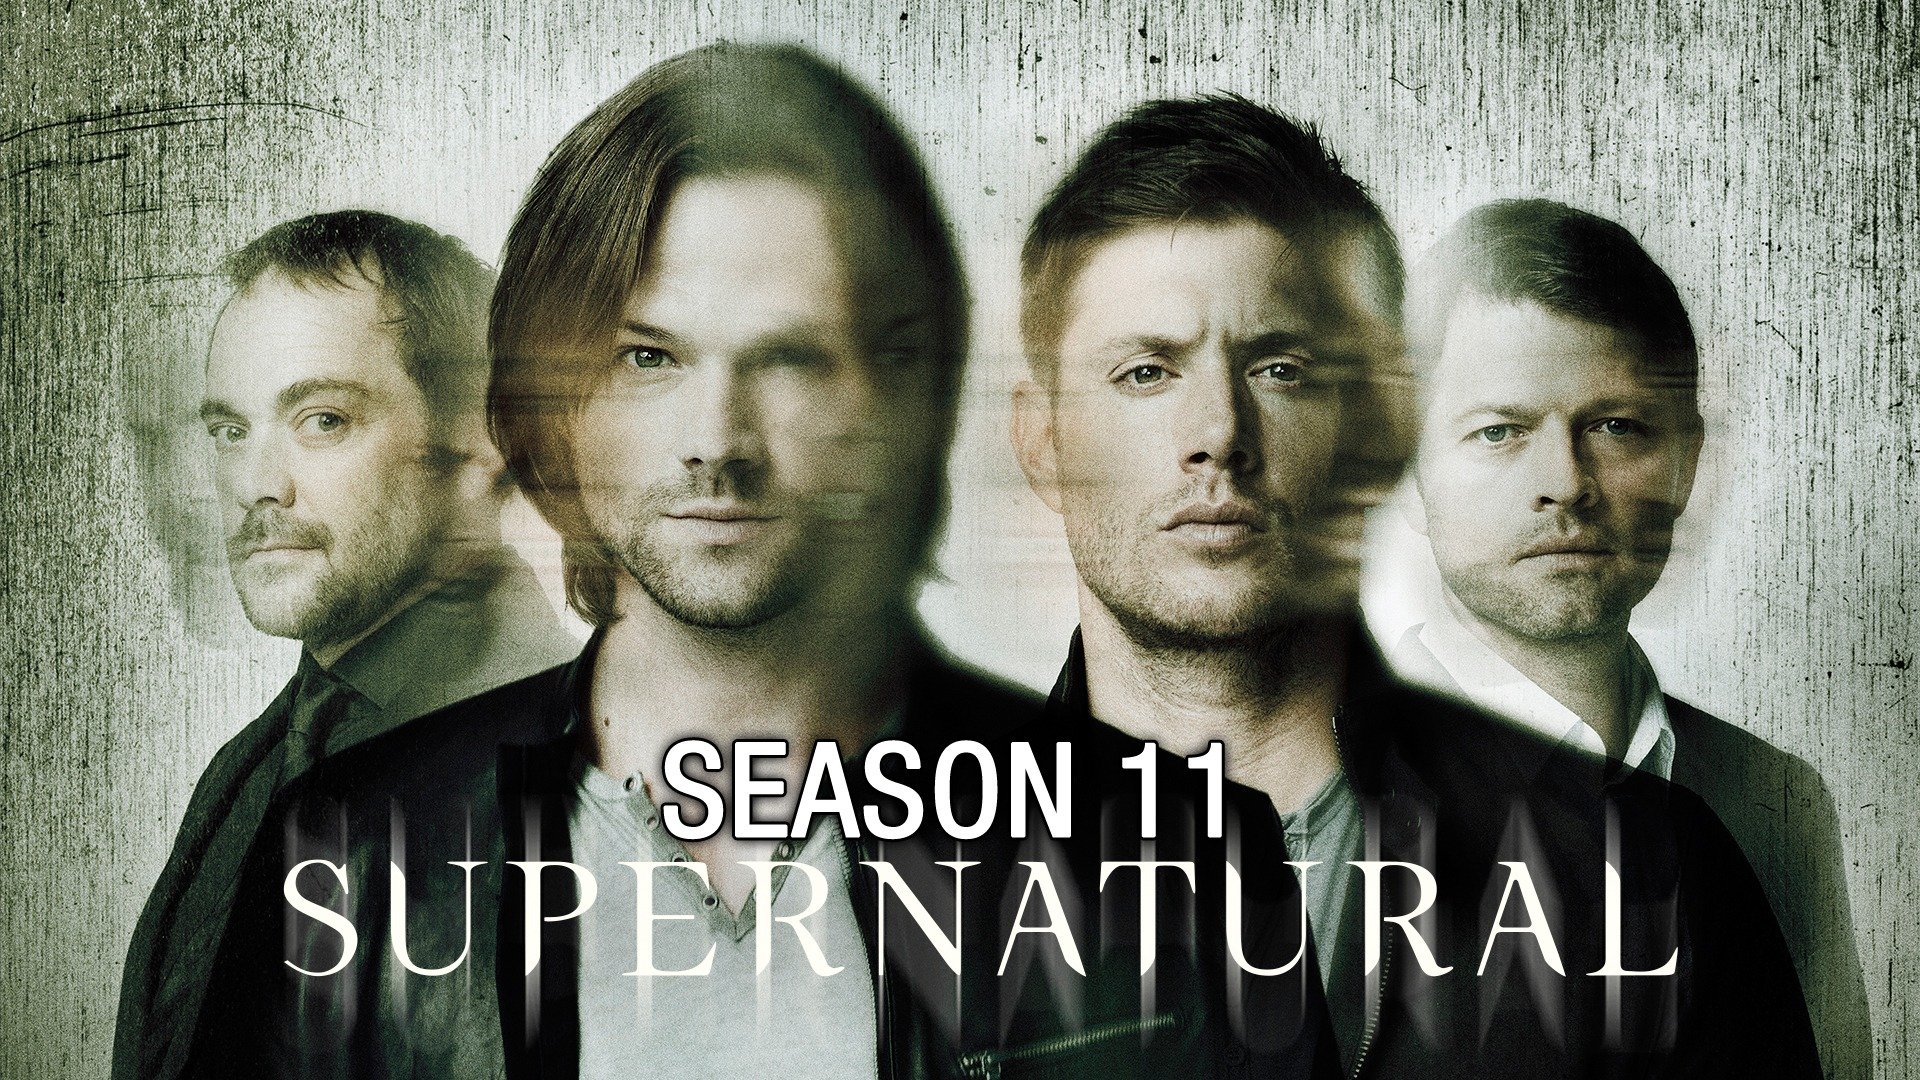 Online watch 4 supernatural season free 11 episode 